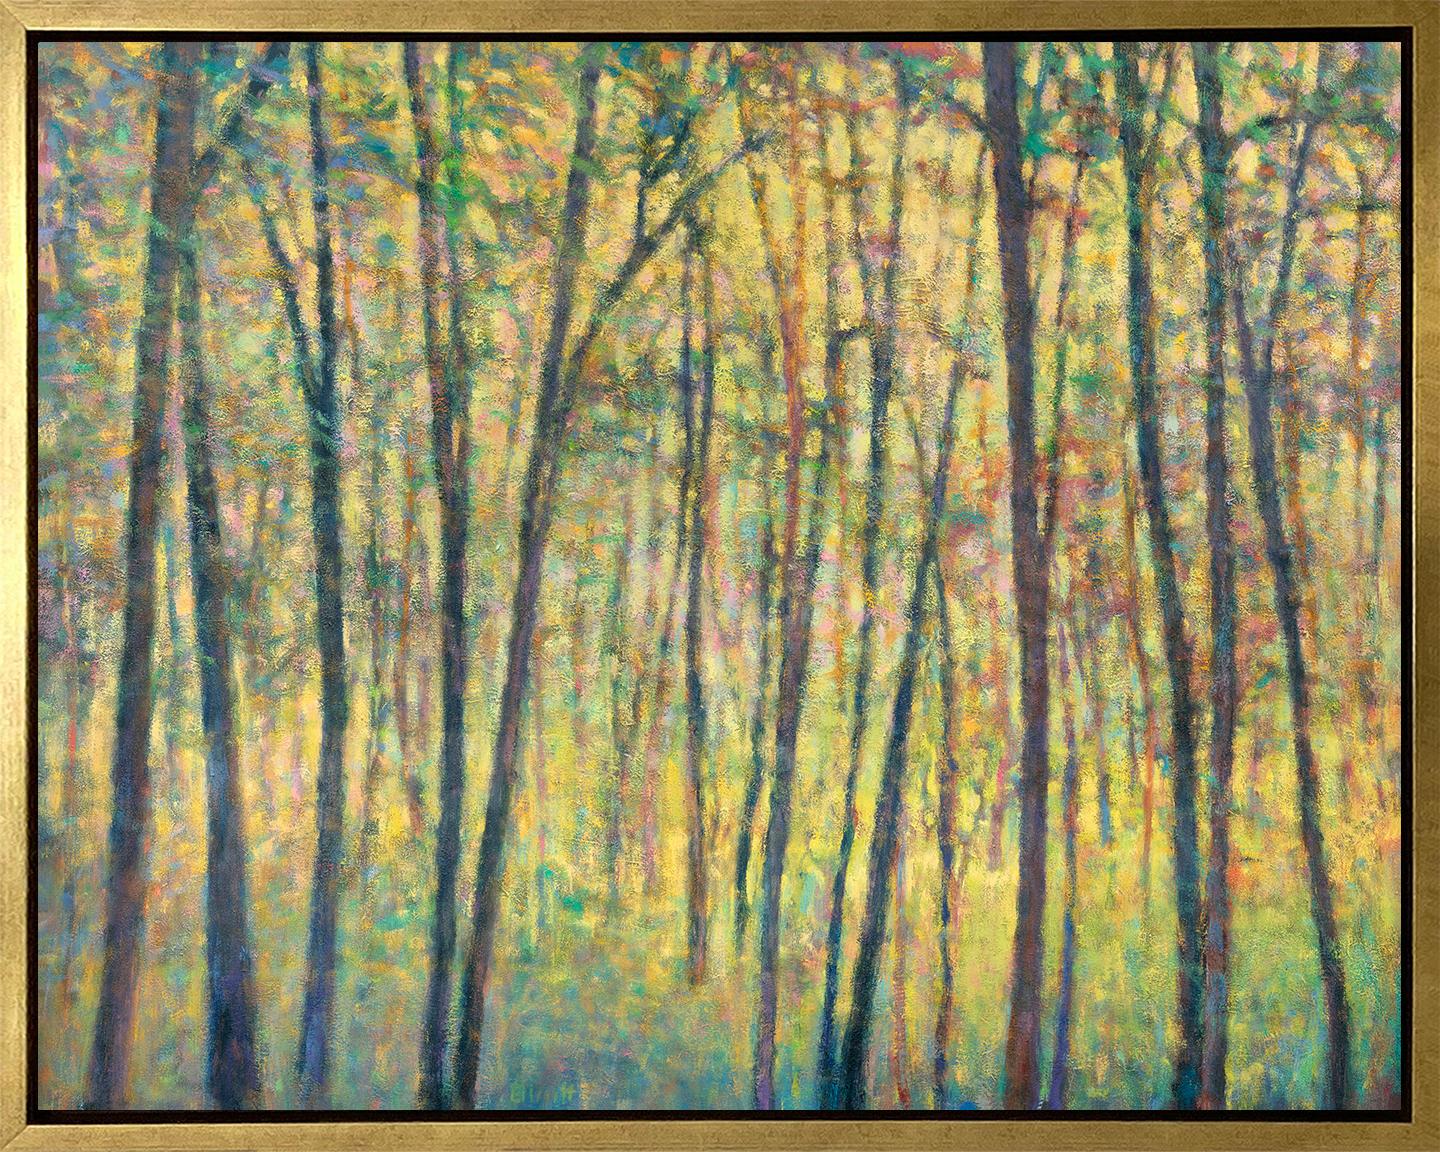 Ken Elliott Landscape Print - "Saccades XII, " Framed Limited Edition Giclee Print, 24" x 30"